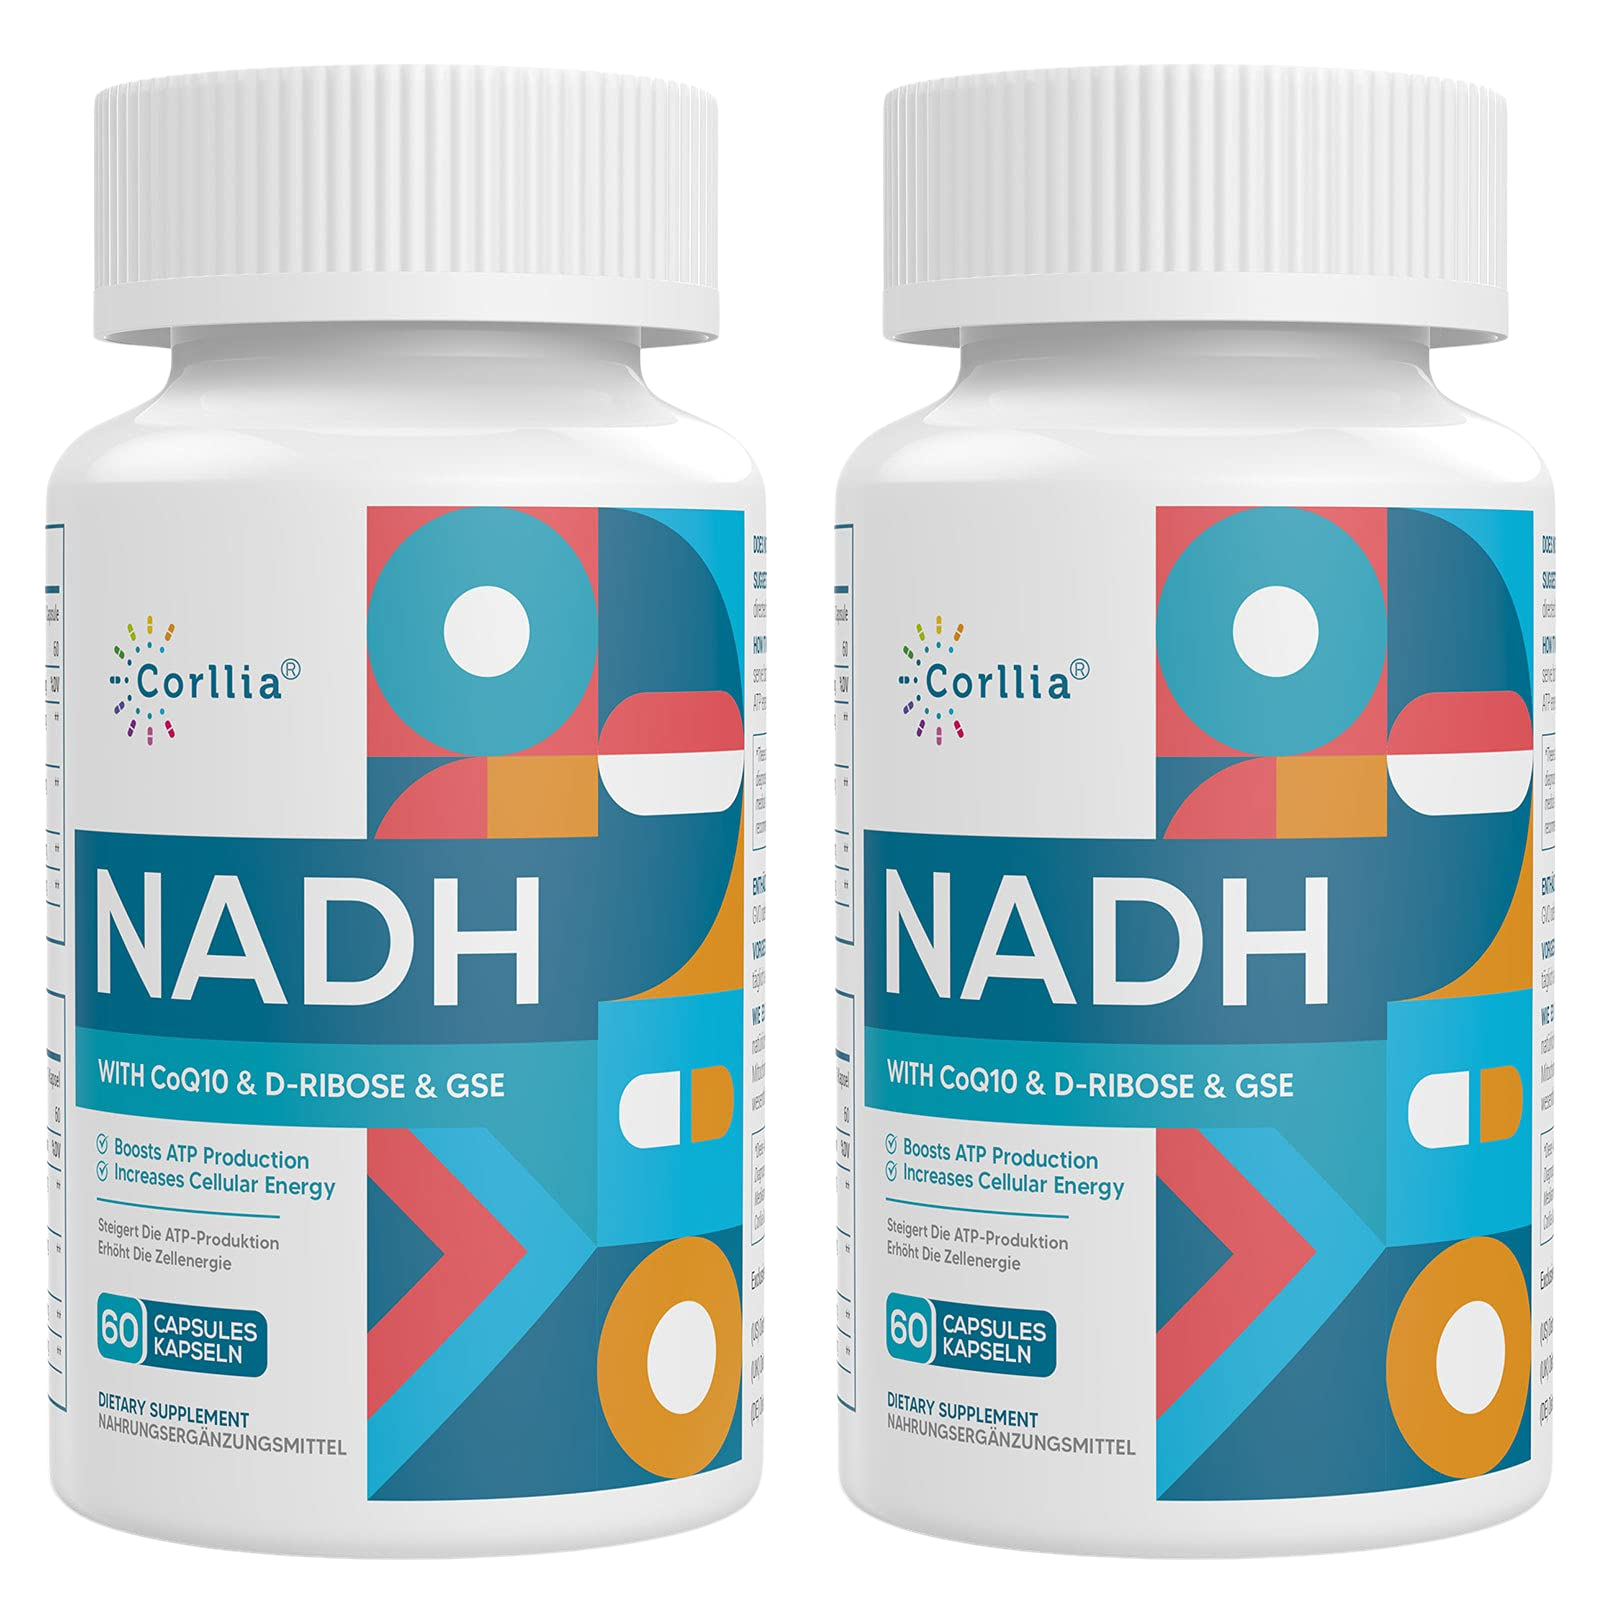 Corllia NADH Supplement